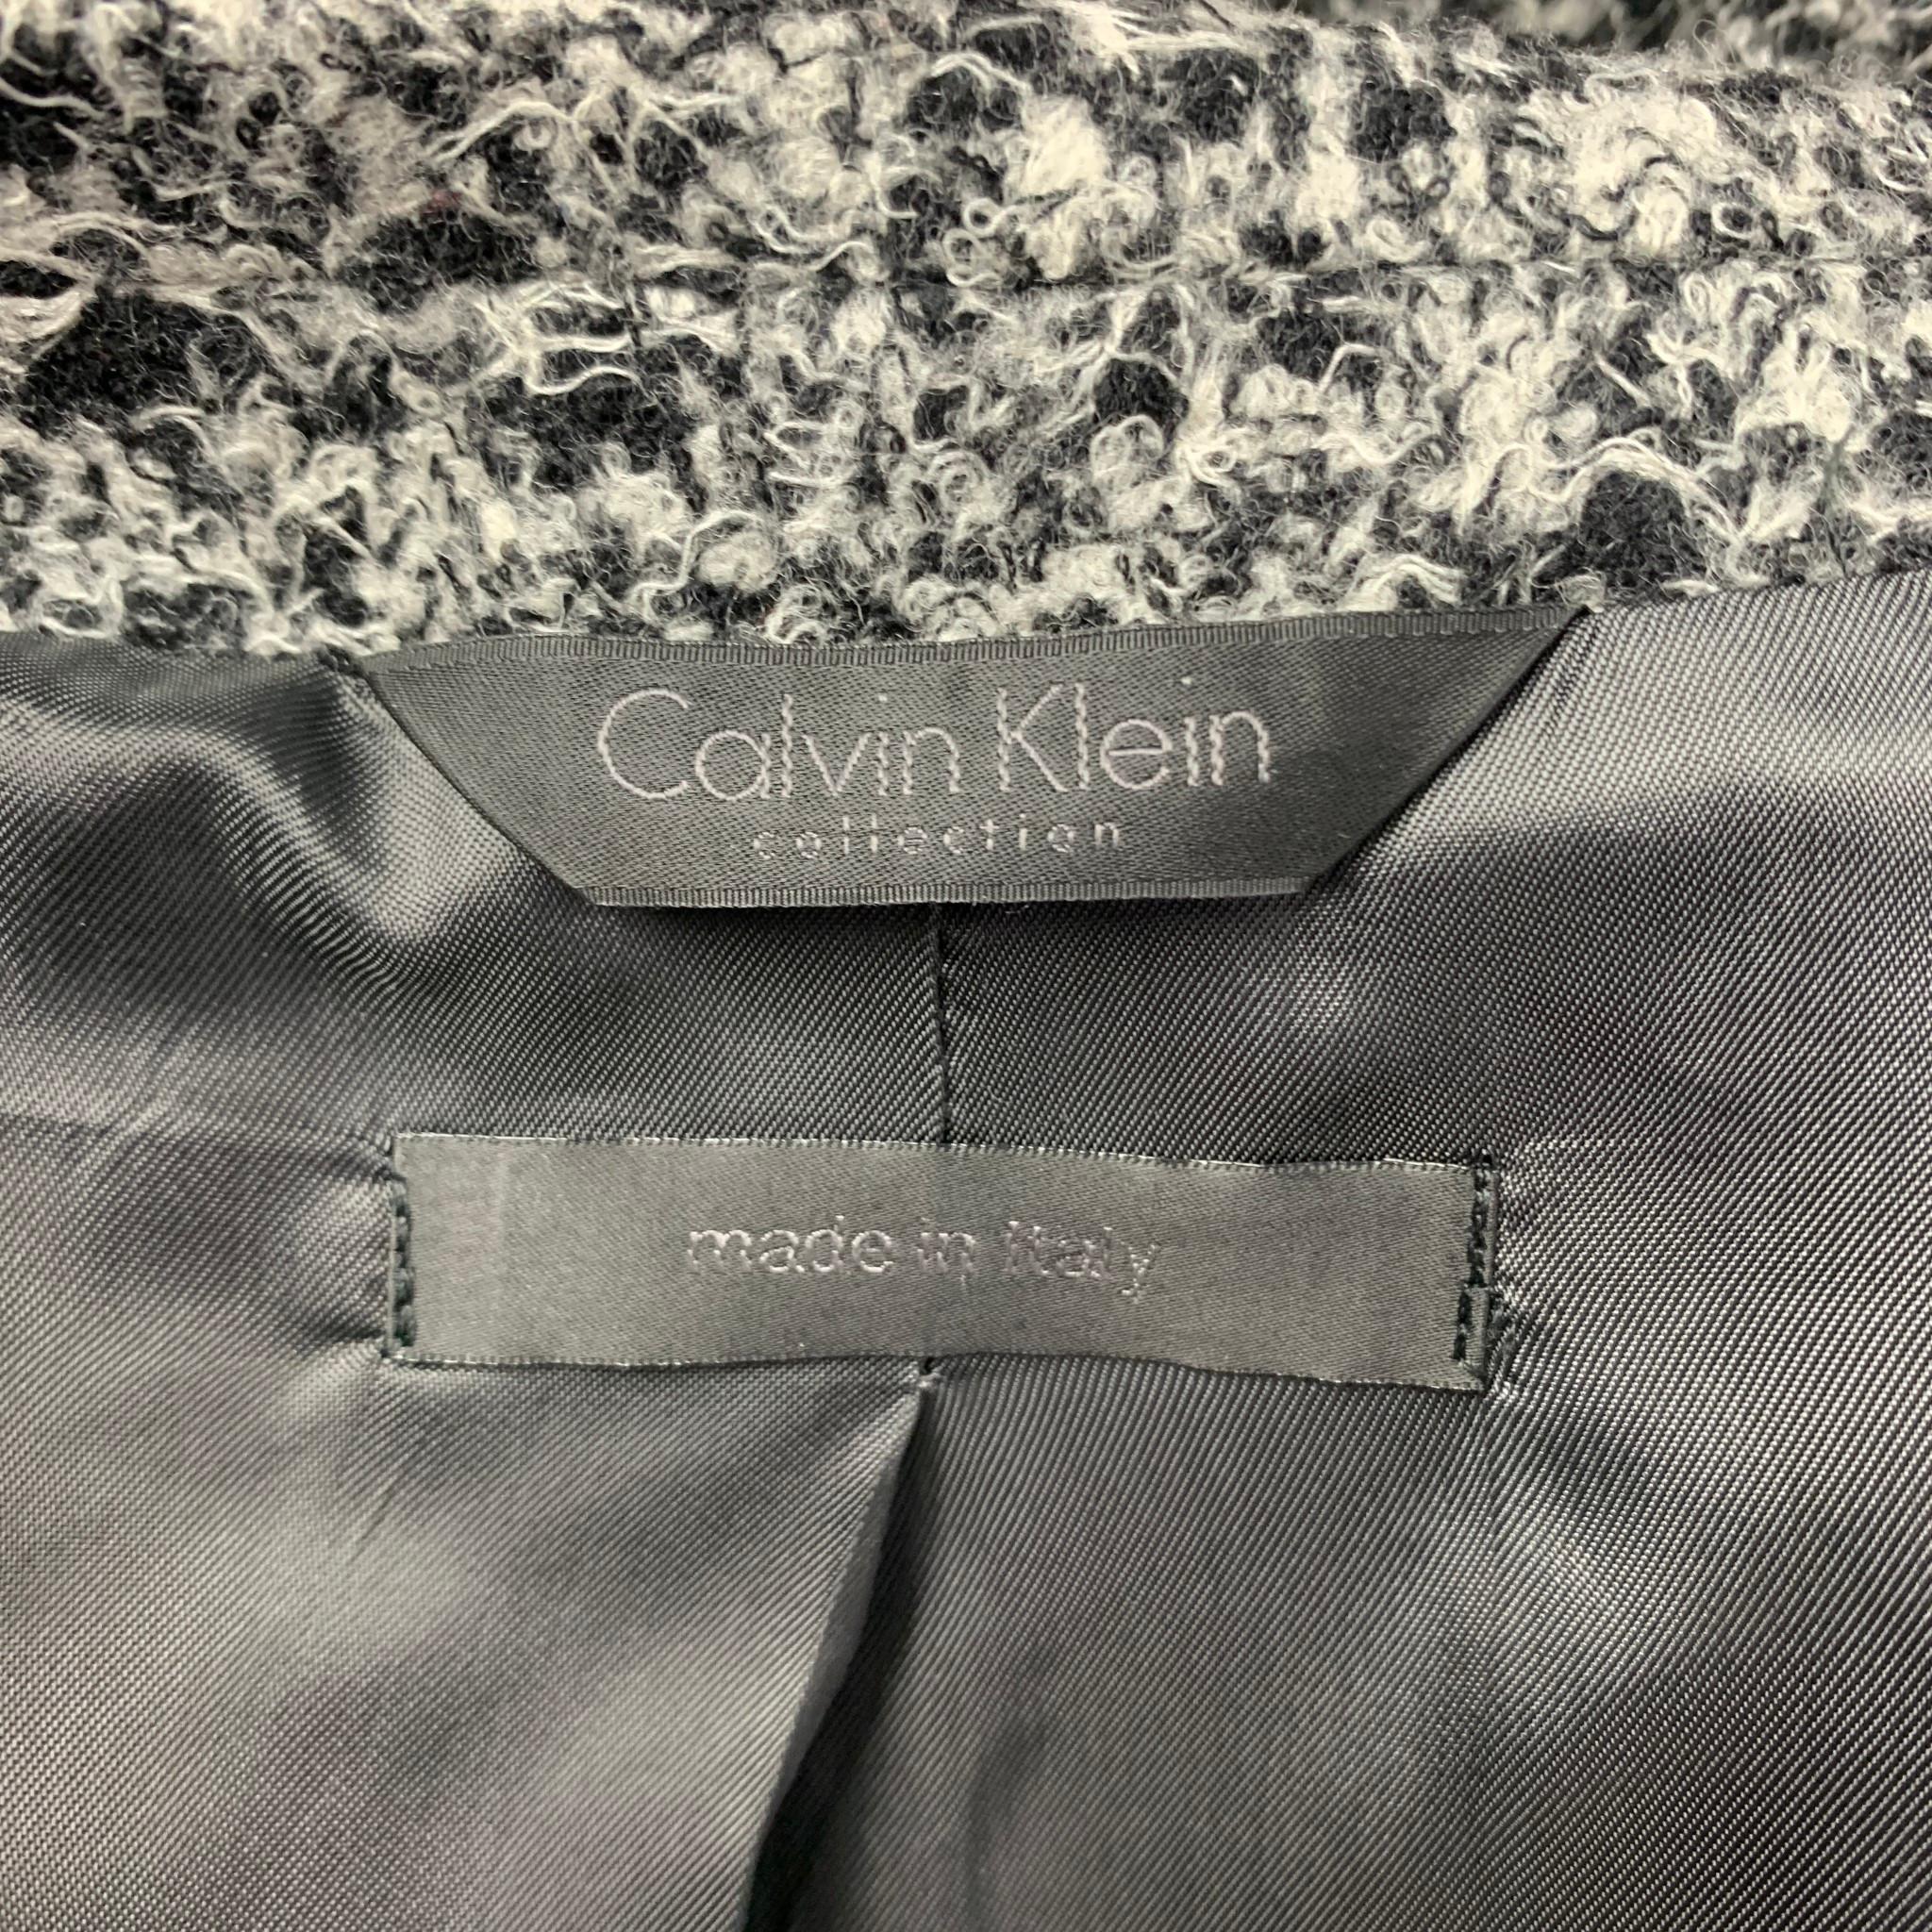 CALVIN KLEIN COLLECTION Size 38 Black & White Tweed Notch Lapel Sport Coat 3